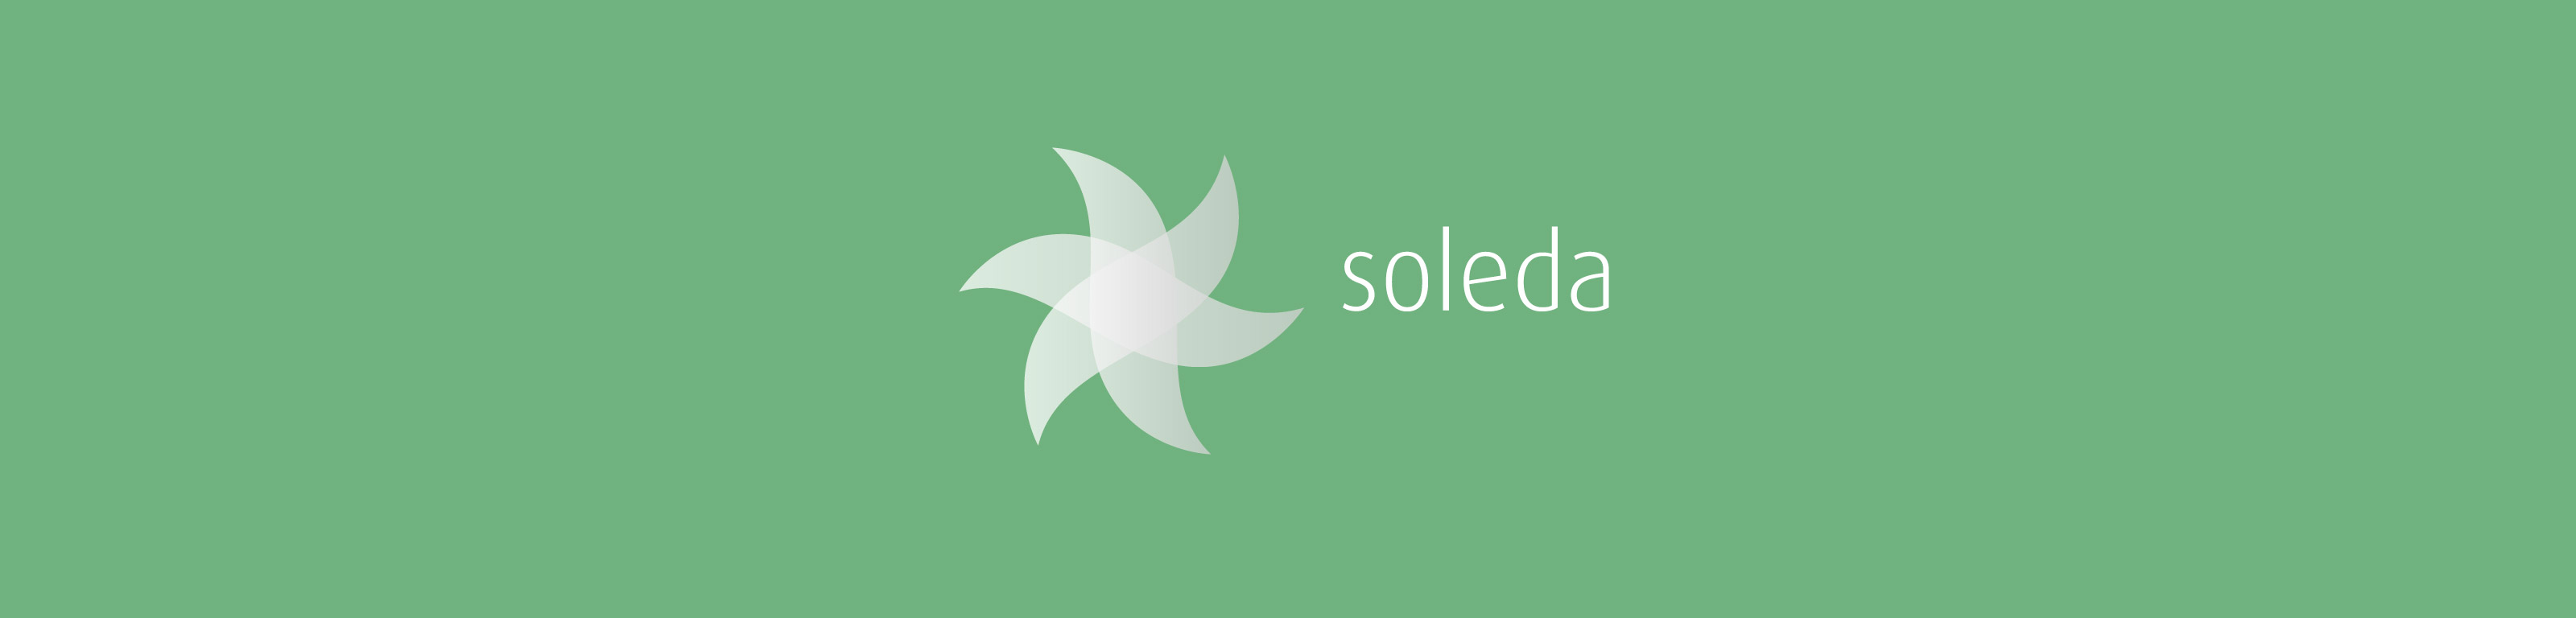 afbeelding Soleda logo diapositief